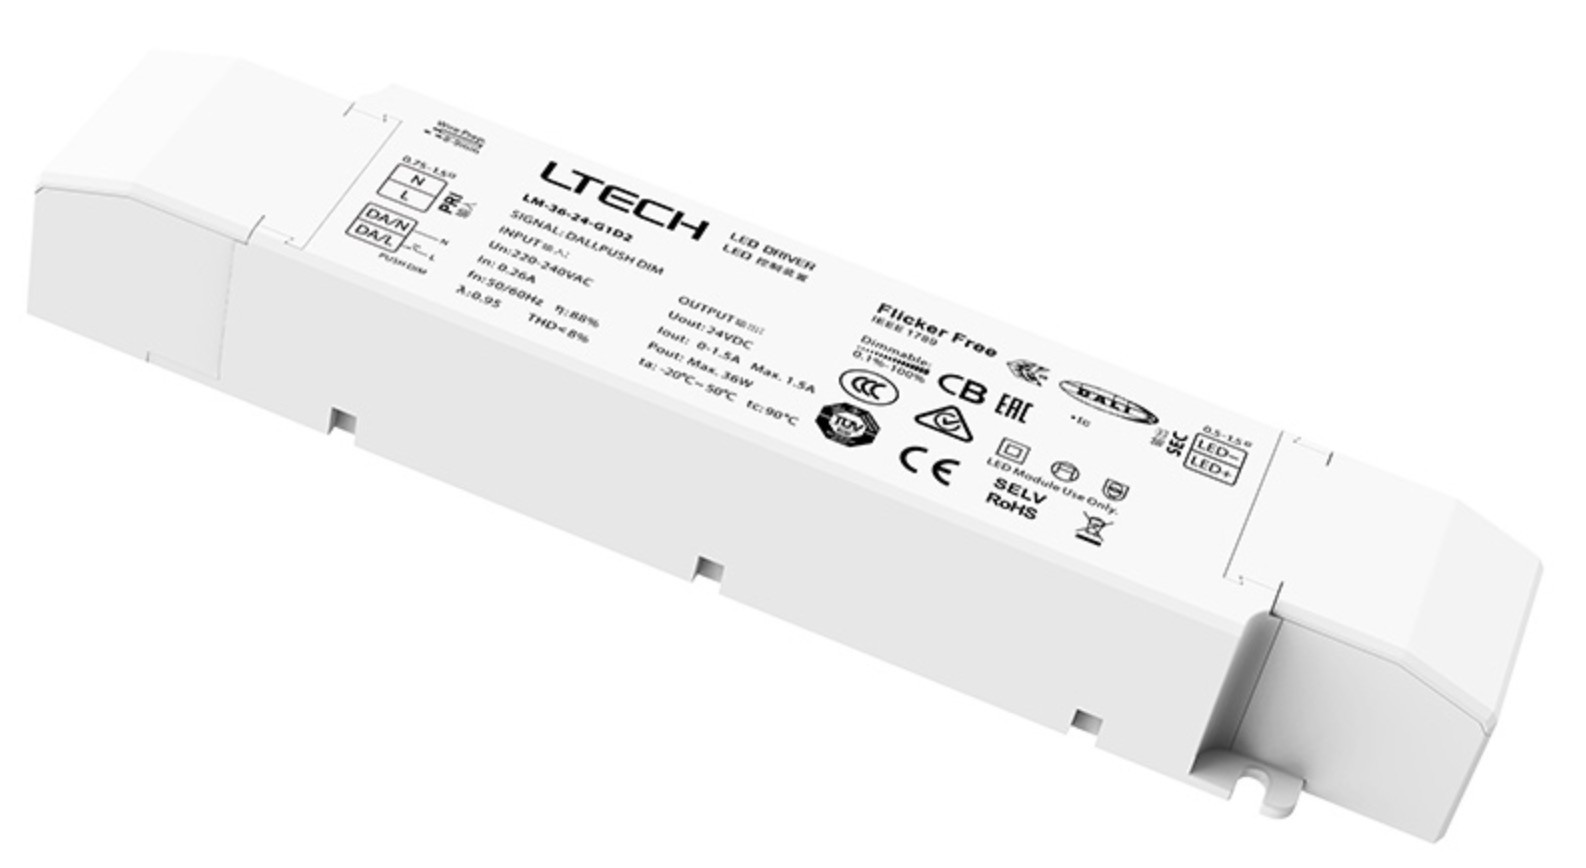 LTECH LM-36-24-G1D2 Dali Push DIM DT6 CV LED Intelligent Driver